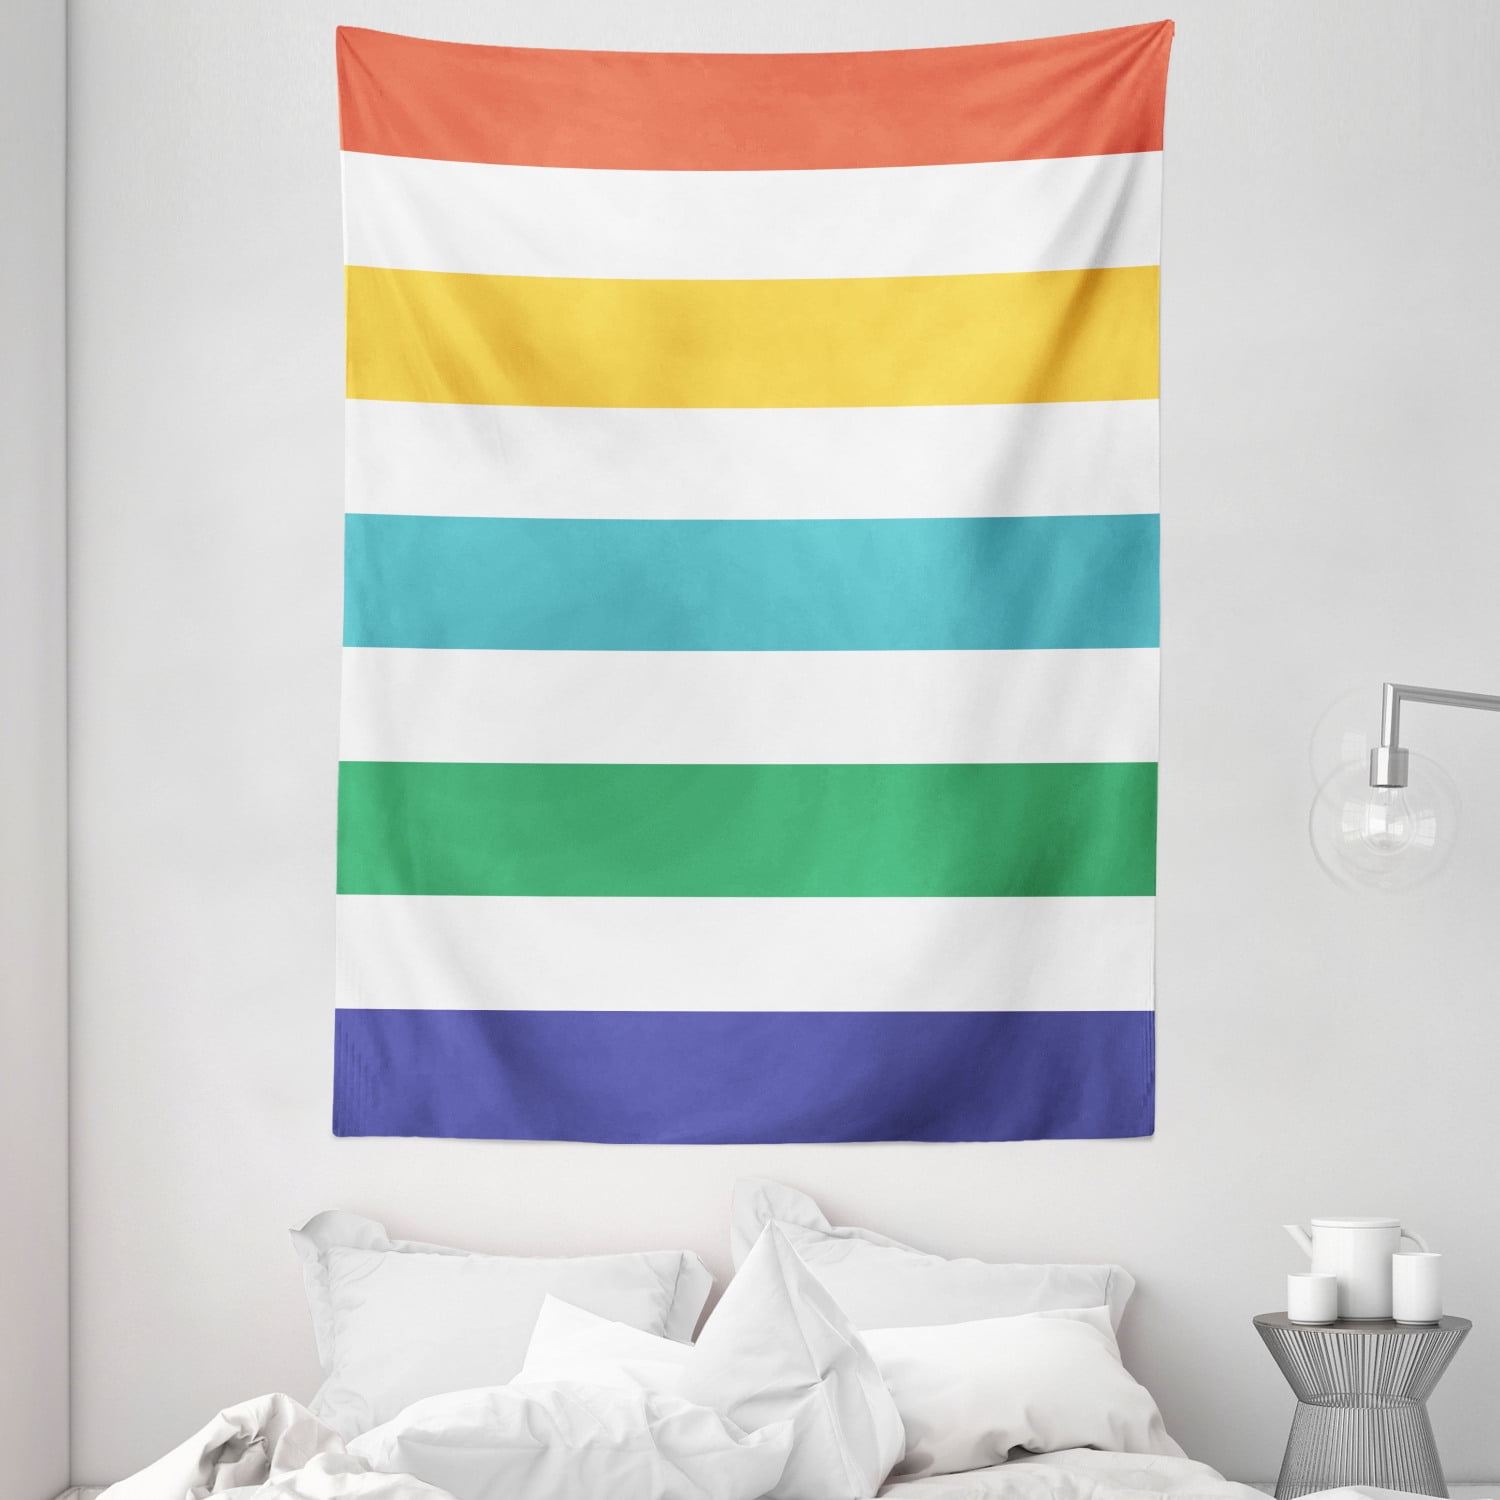 Dandelion Rainbow Tapestry Wall Hanging for Living Room Bedroom Dorm Decor 